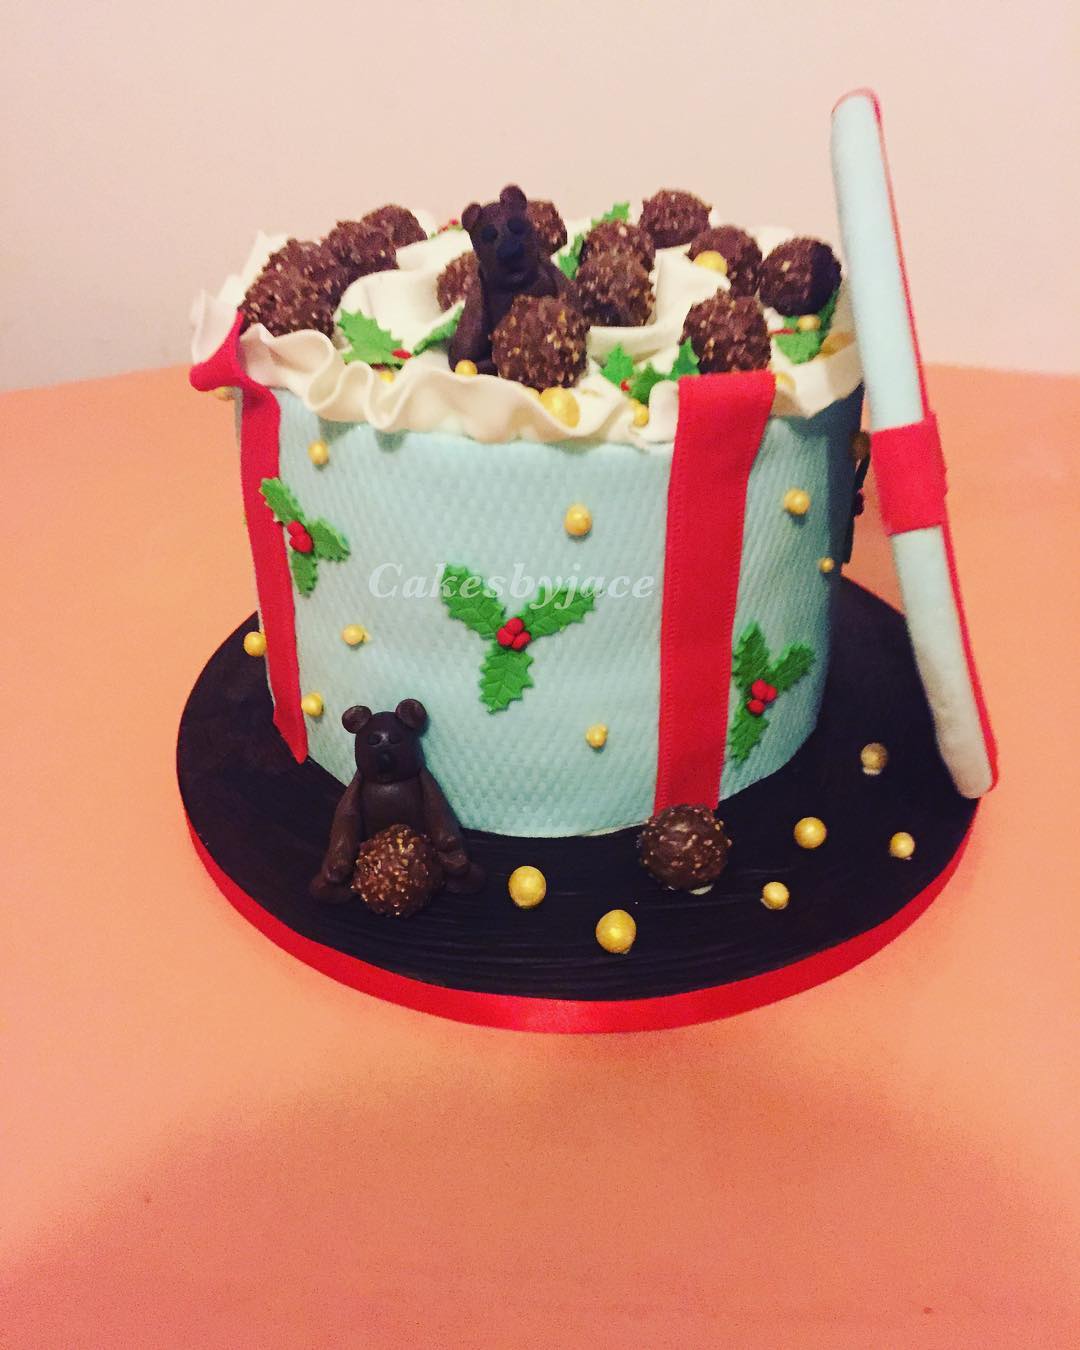 #christmascakes #cakesbyjace #cakes